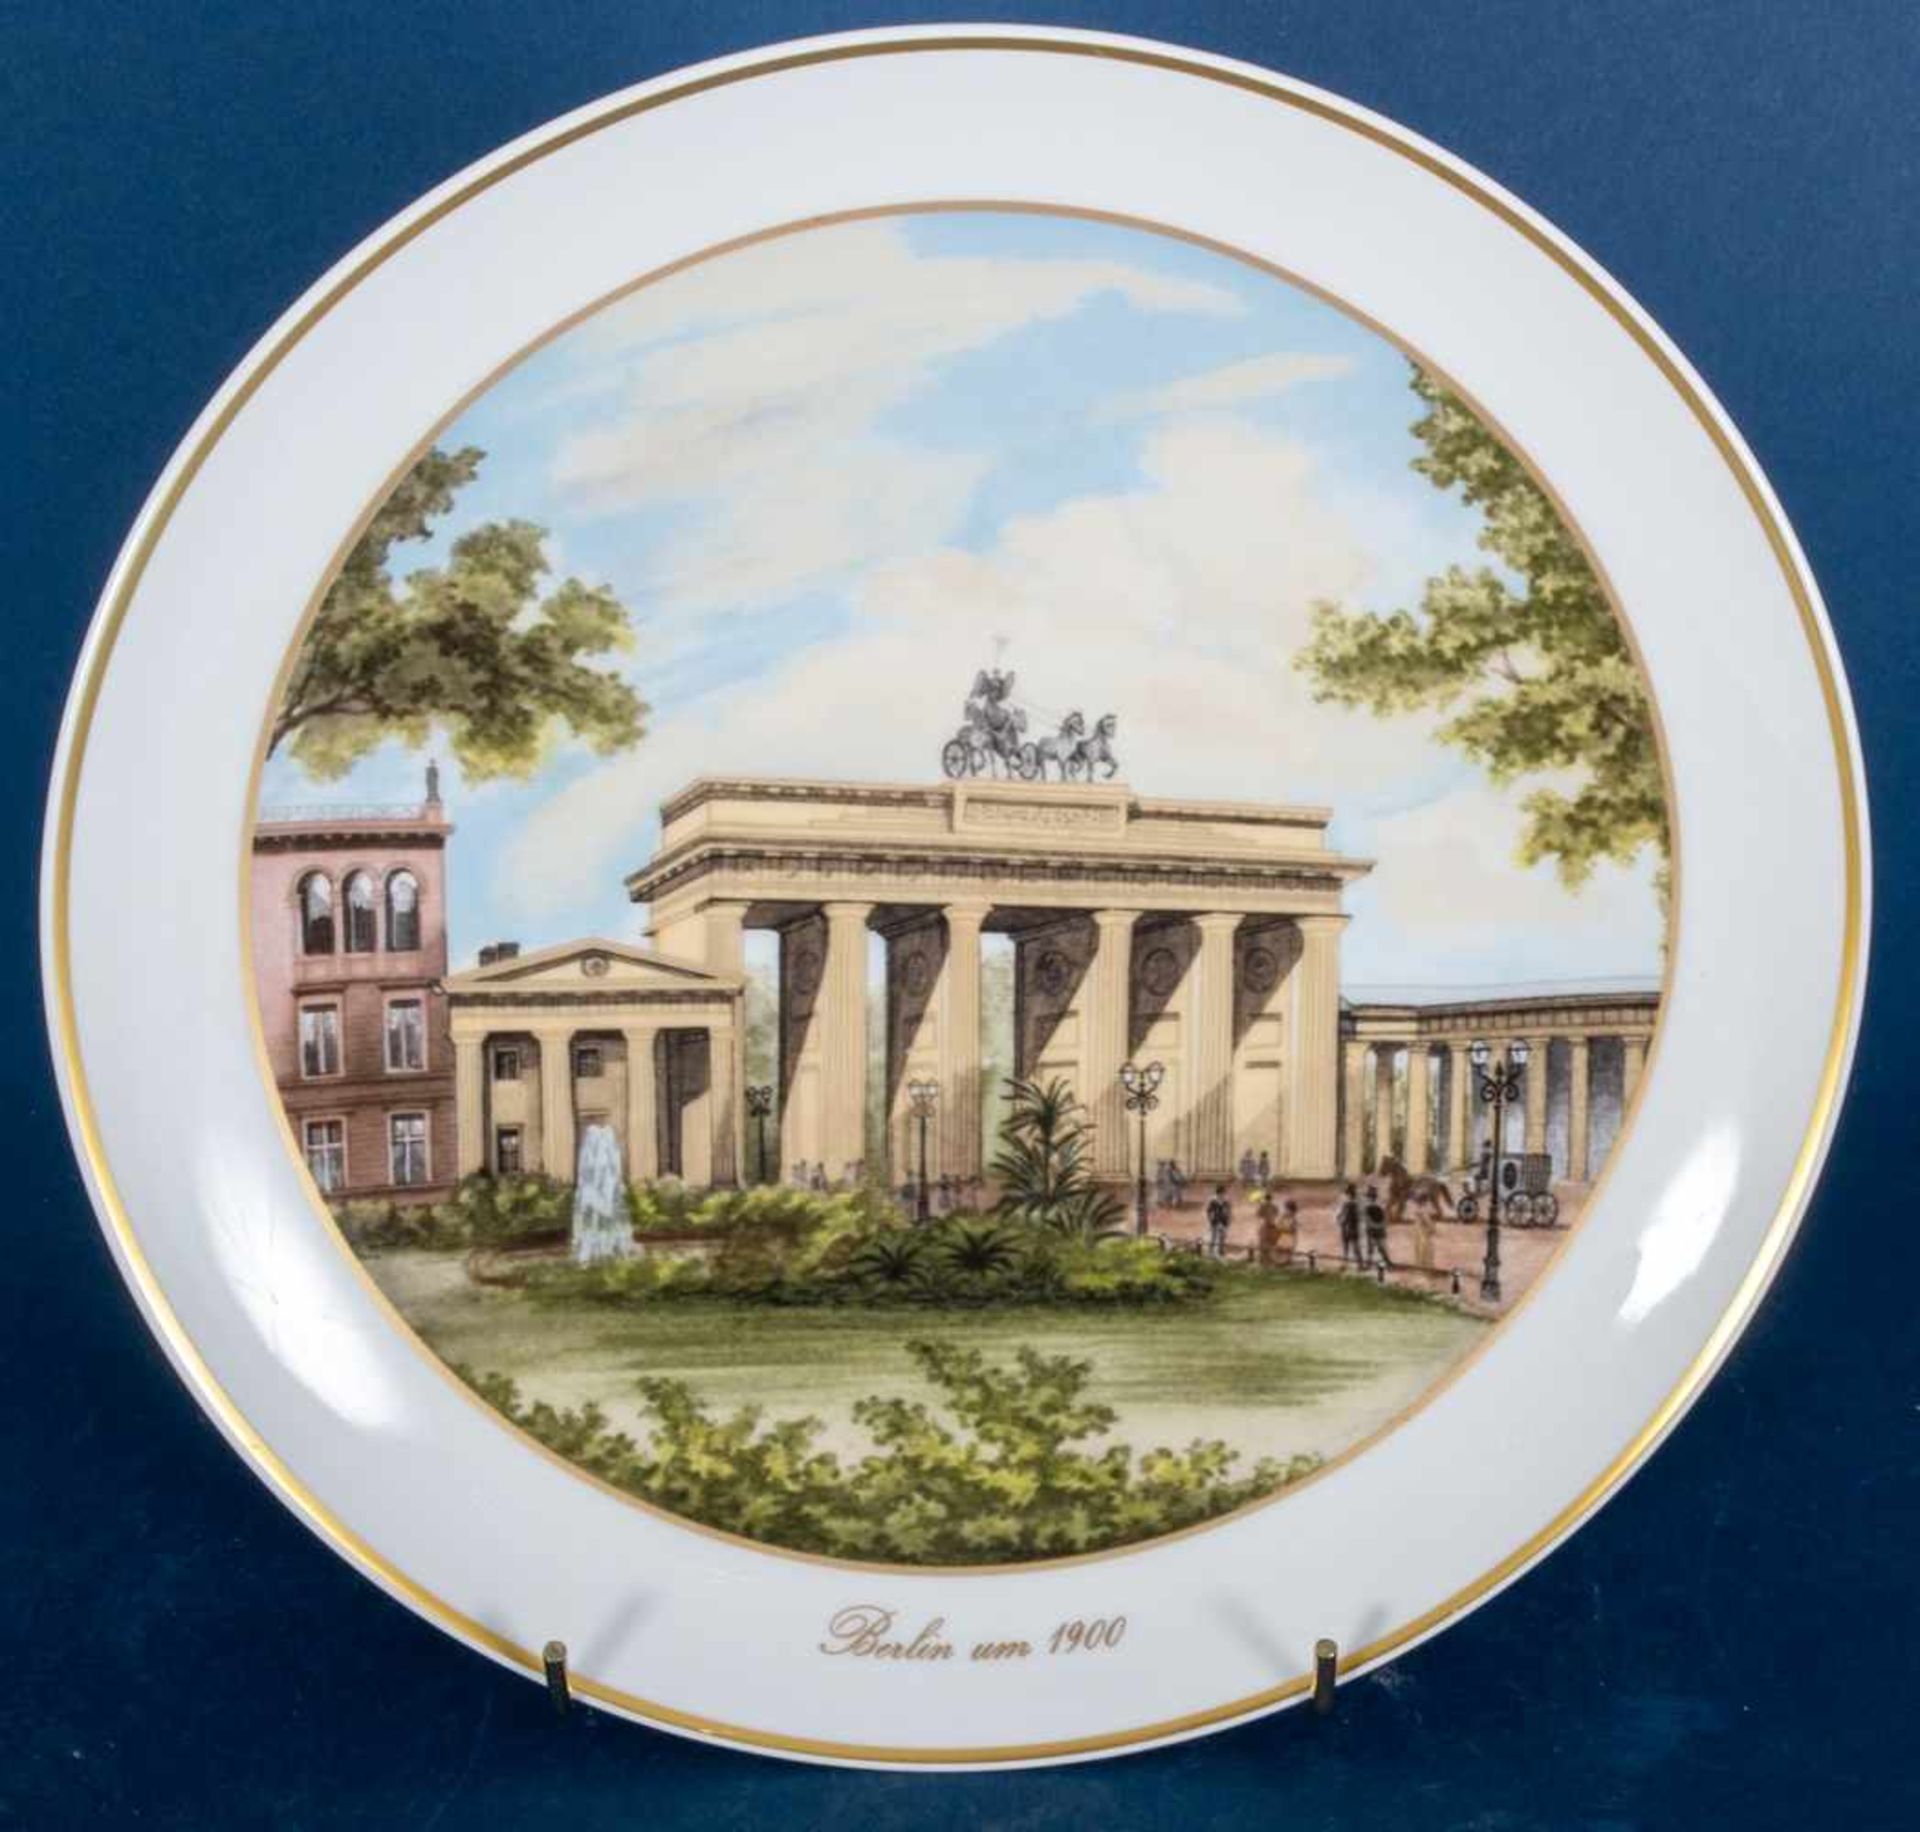 "Berlin um 1900" - Schauteller der KPM-Berlin, Weißporzellan mit polychrom bemaltem "Brandenburger